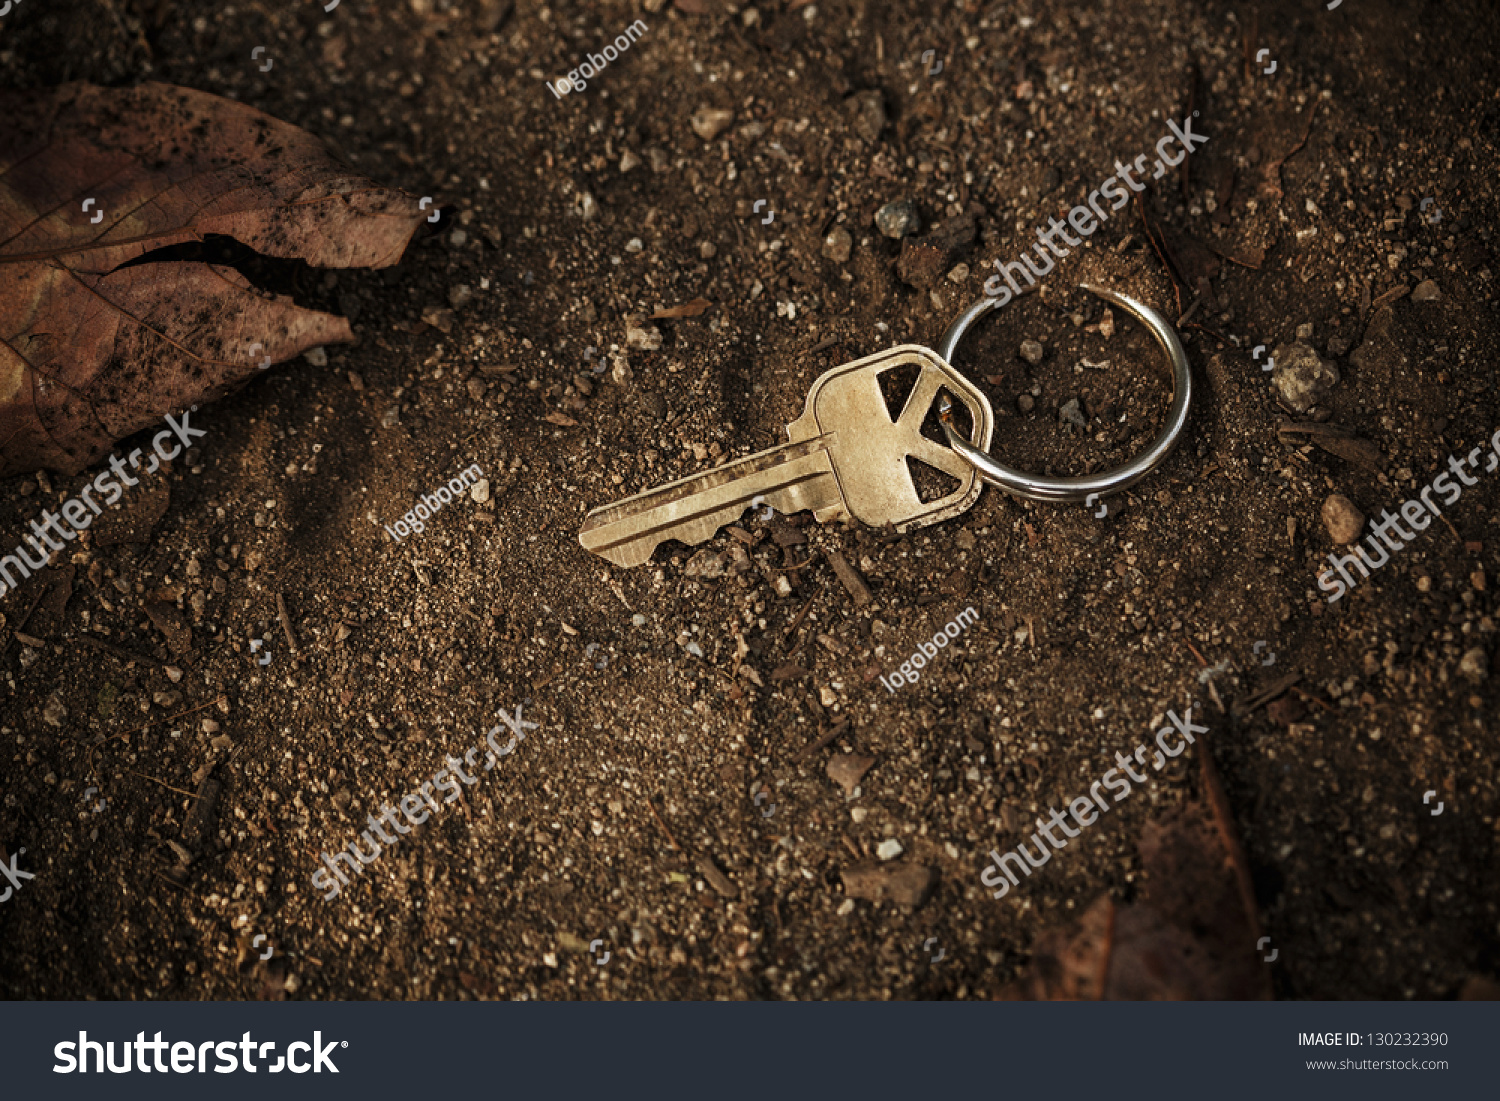 Craigslist lost and found keys